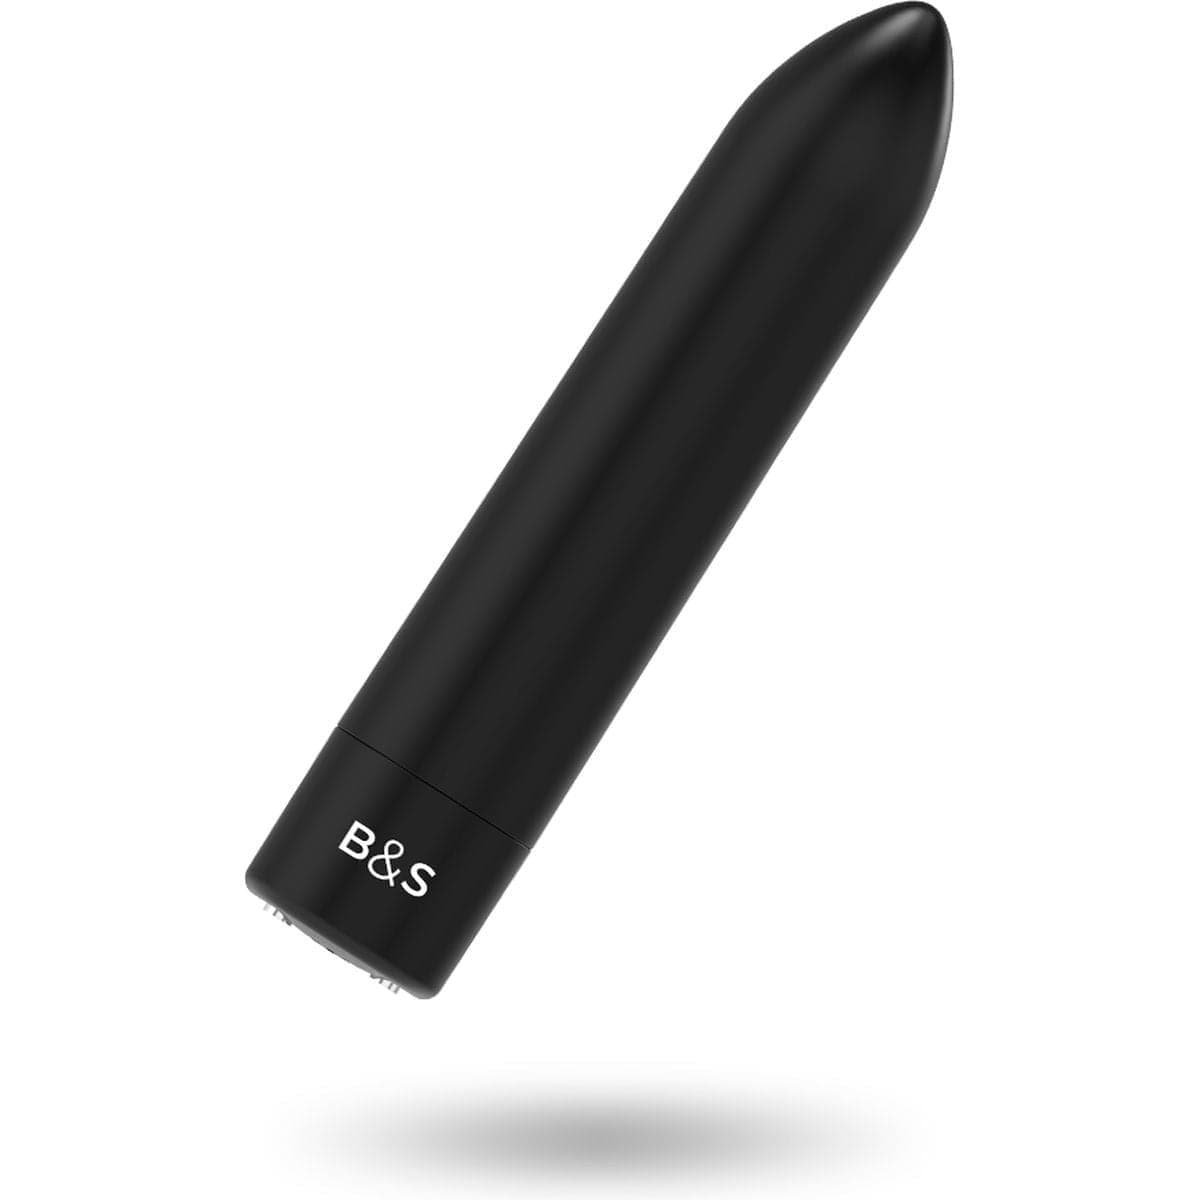 Bala Vibratória Kernex Recarregável USB Preto, 8.6cm Ø1.8cm, 10vibrações - Pérola SexShop